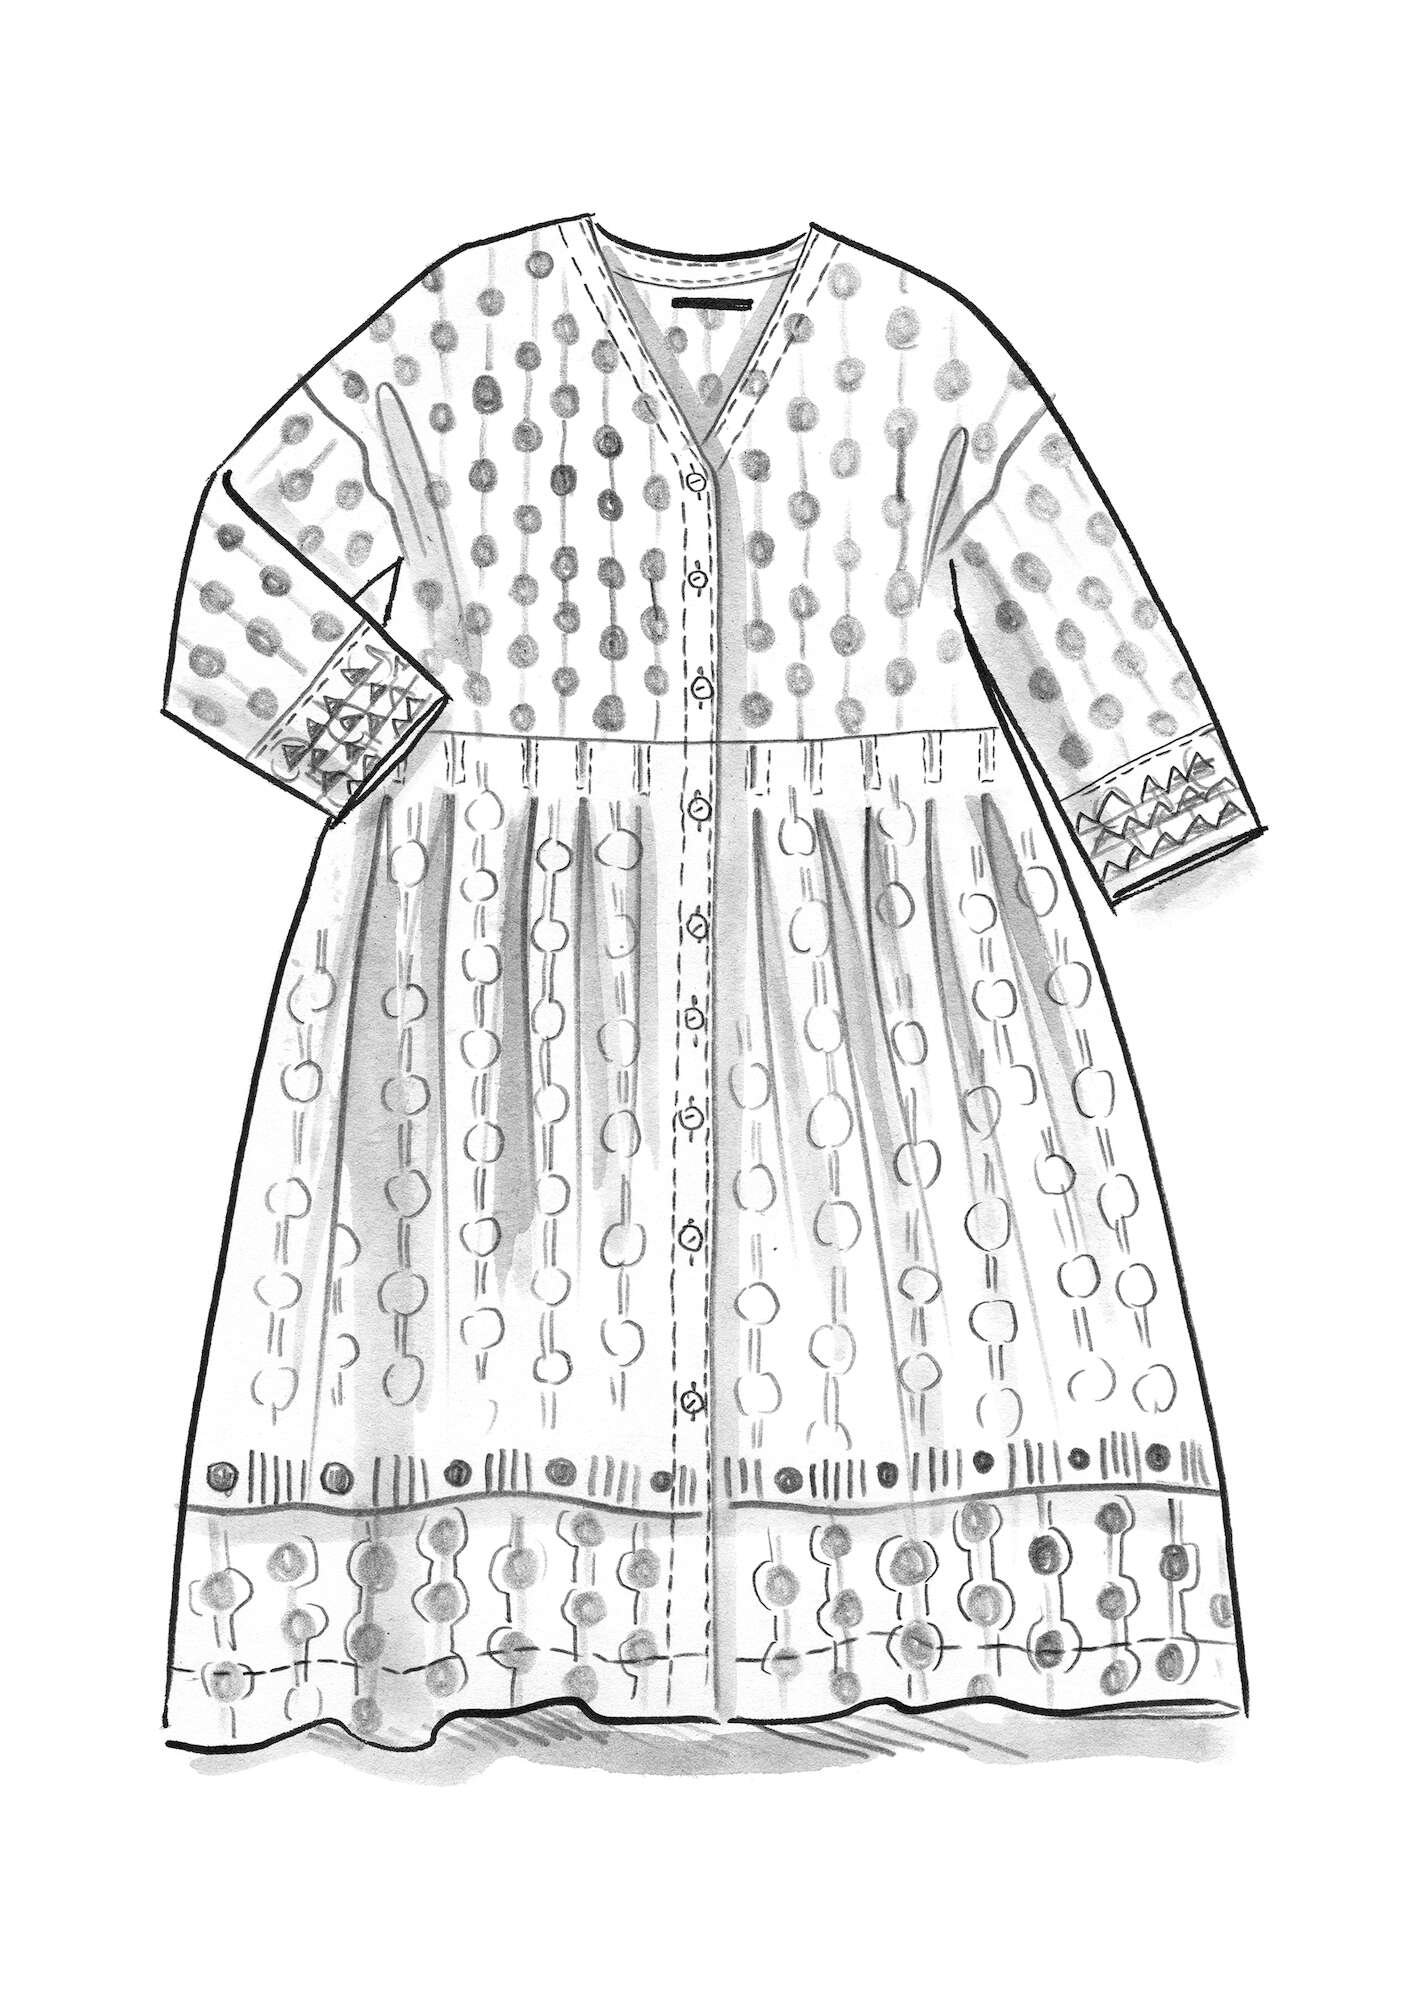 Woven “Zazu” dress in organic cotton indigo